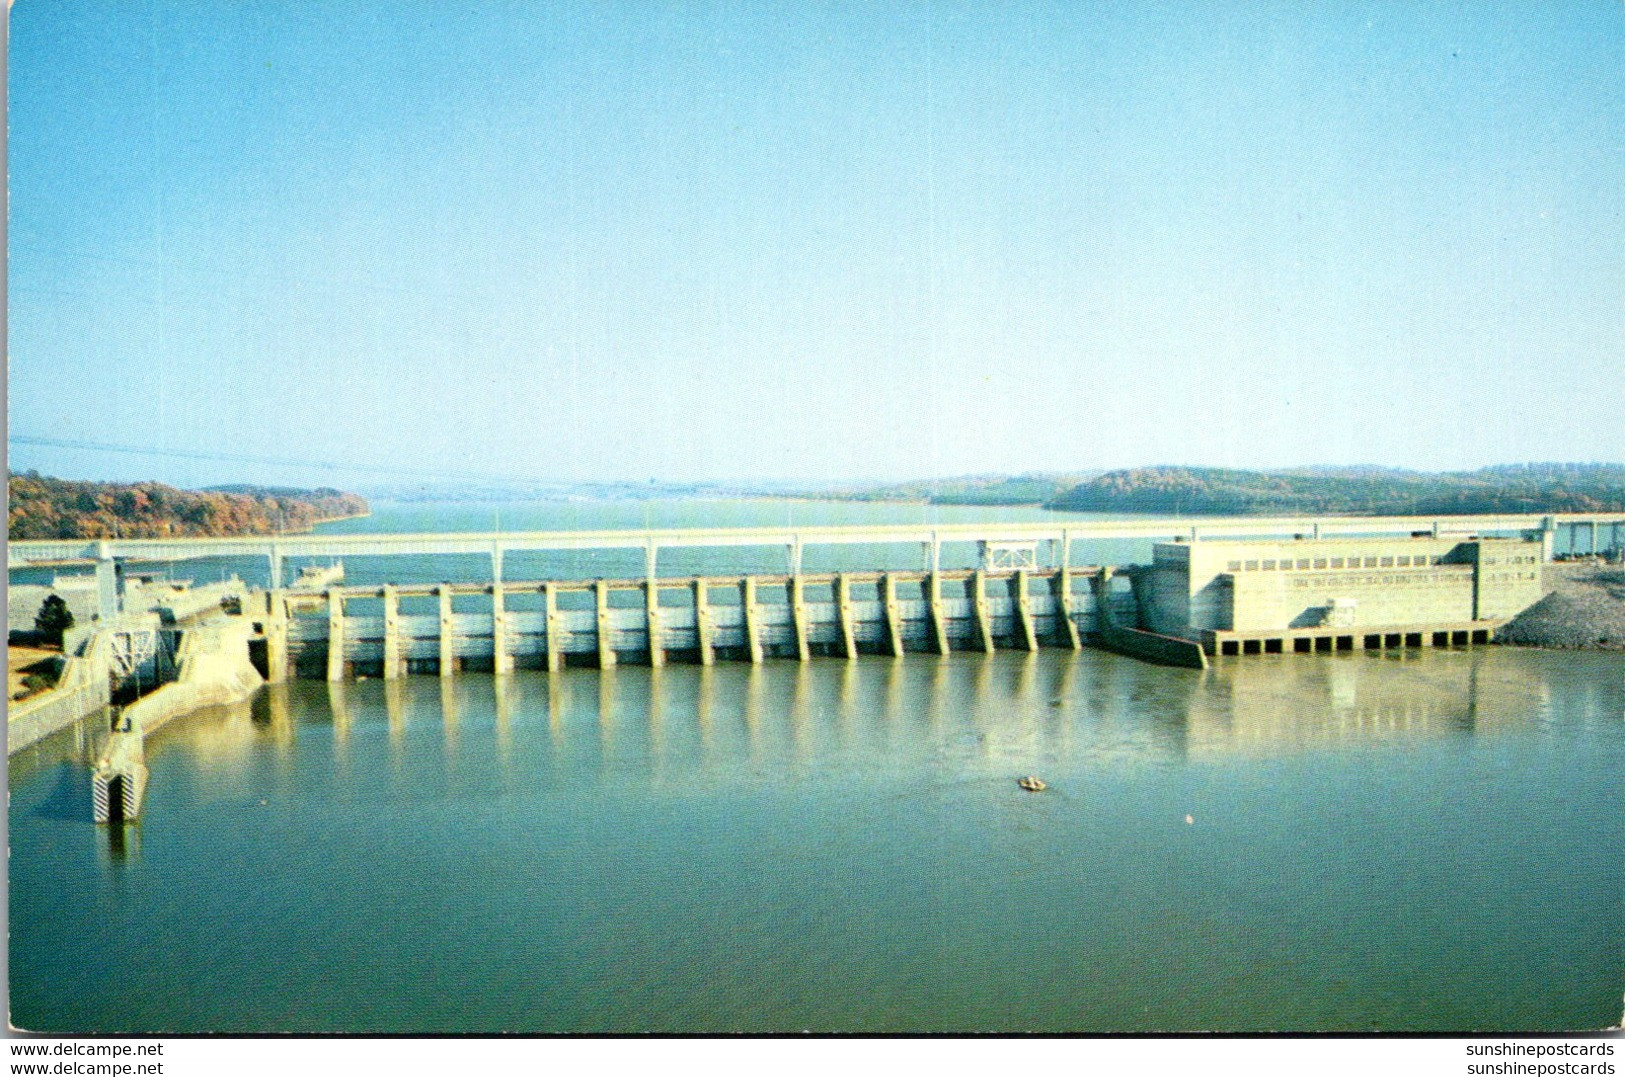 Tennessee Chattanooga Chickamauga Dam - Chattanooga